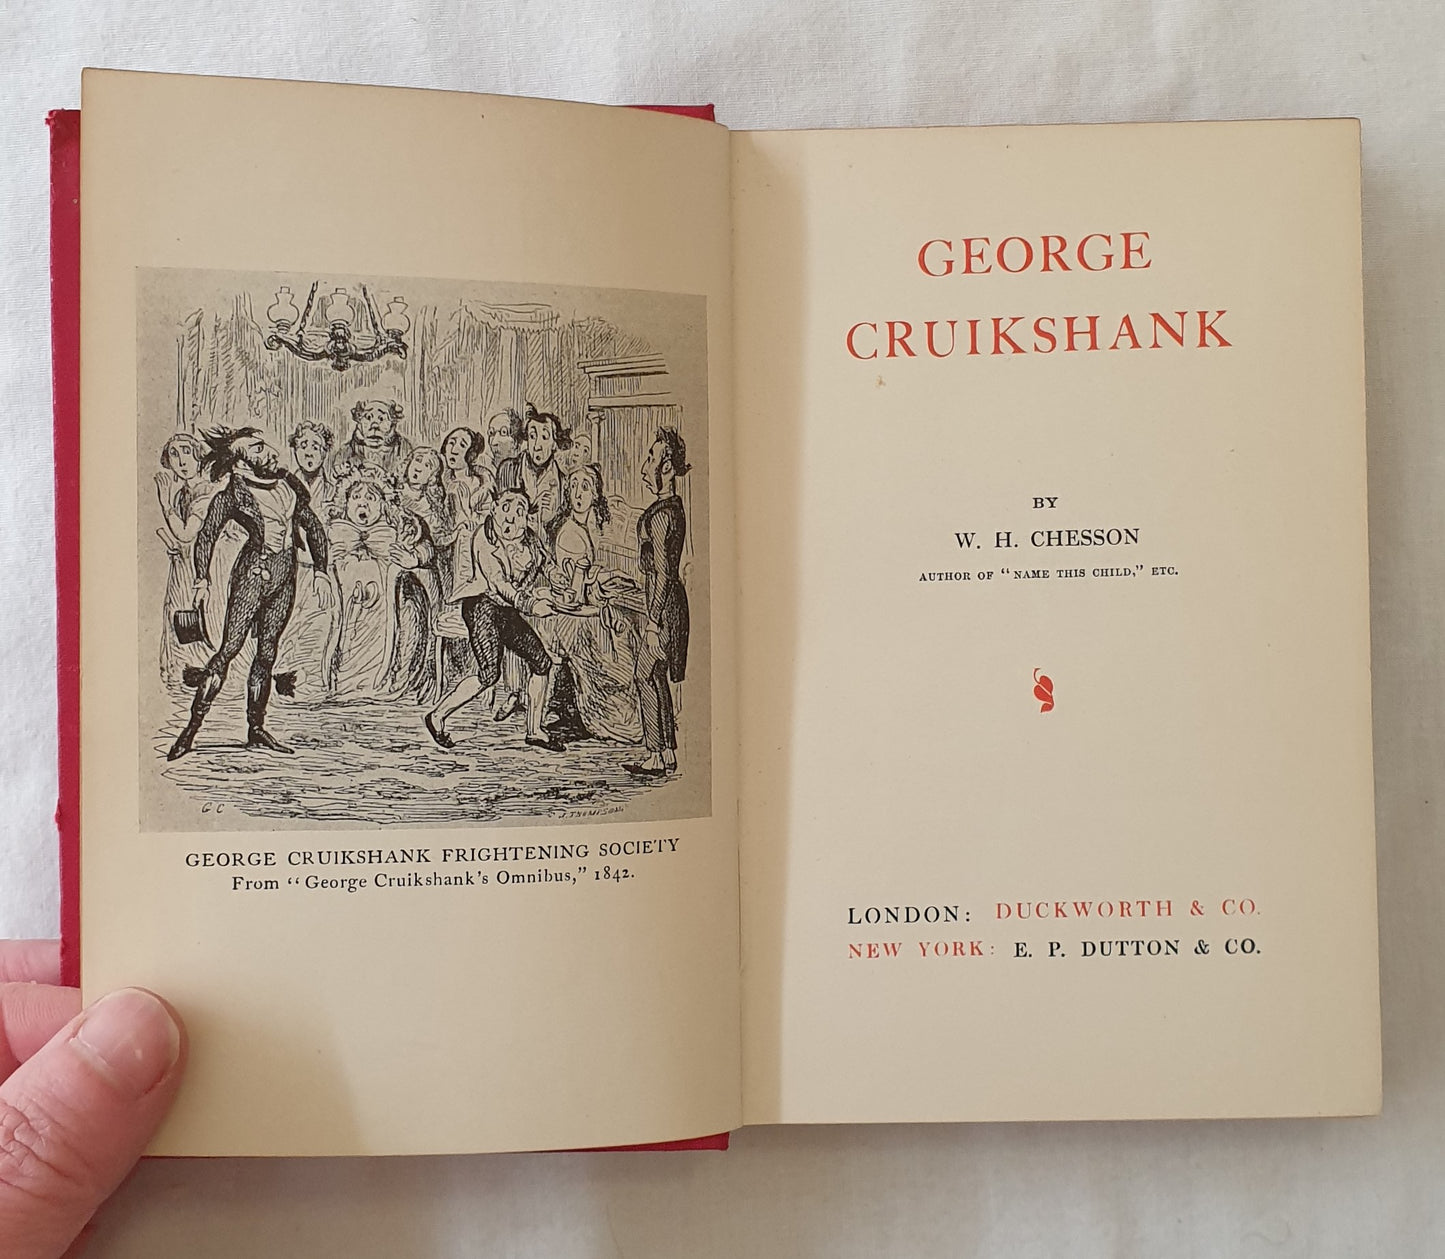 George Cruikshank by W. H. Chesson